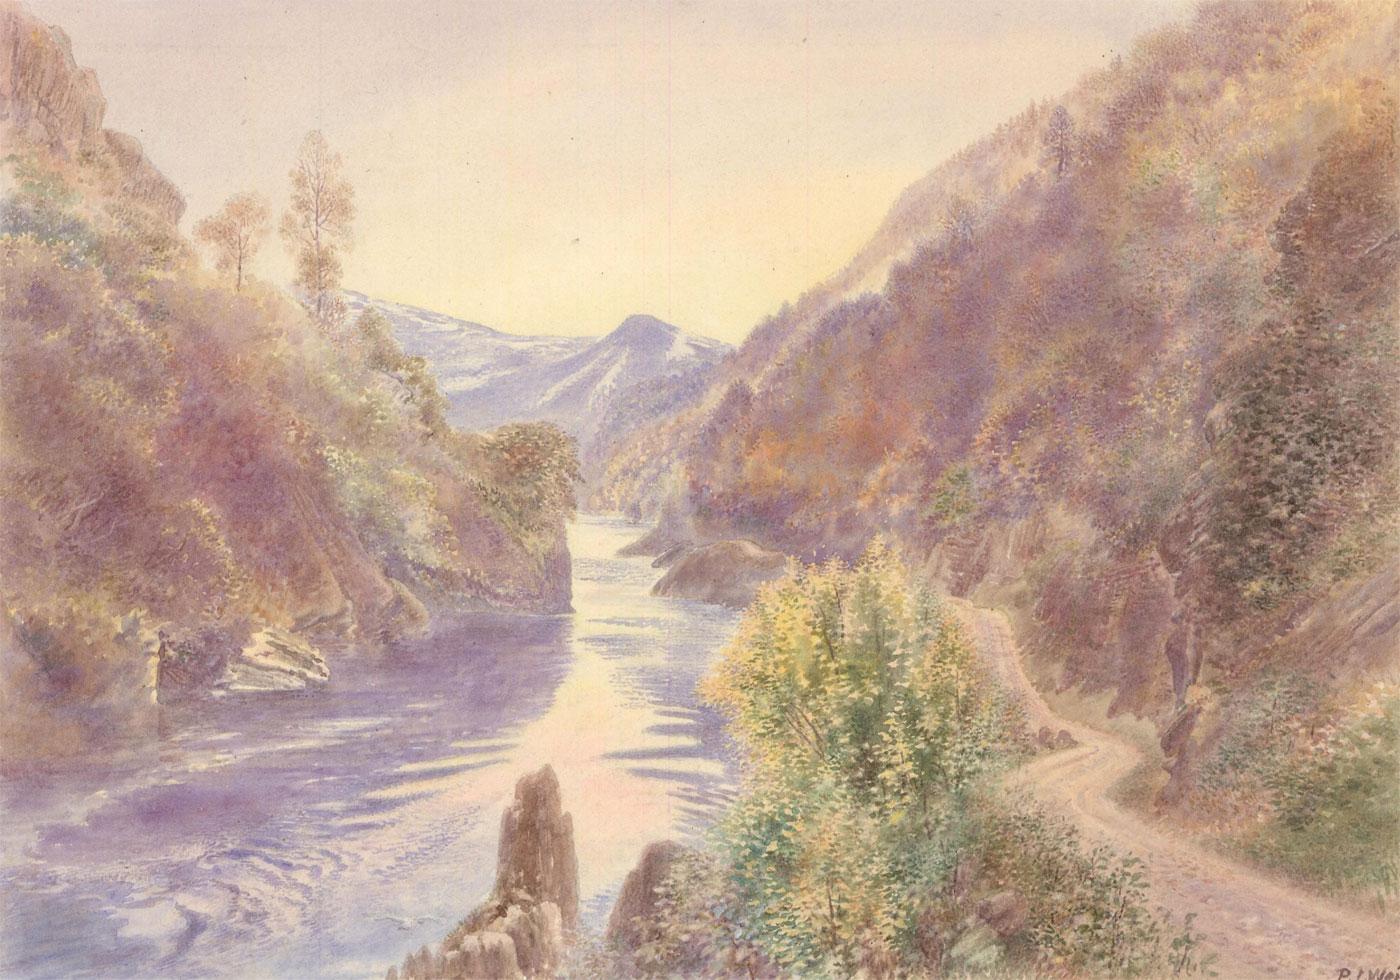 Unknown Landscape Art - Peter Ingram Weir (1864-1943) - 1907 Watercolour, River Landscape, Norway